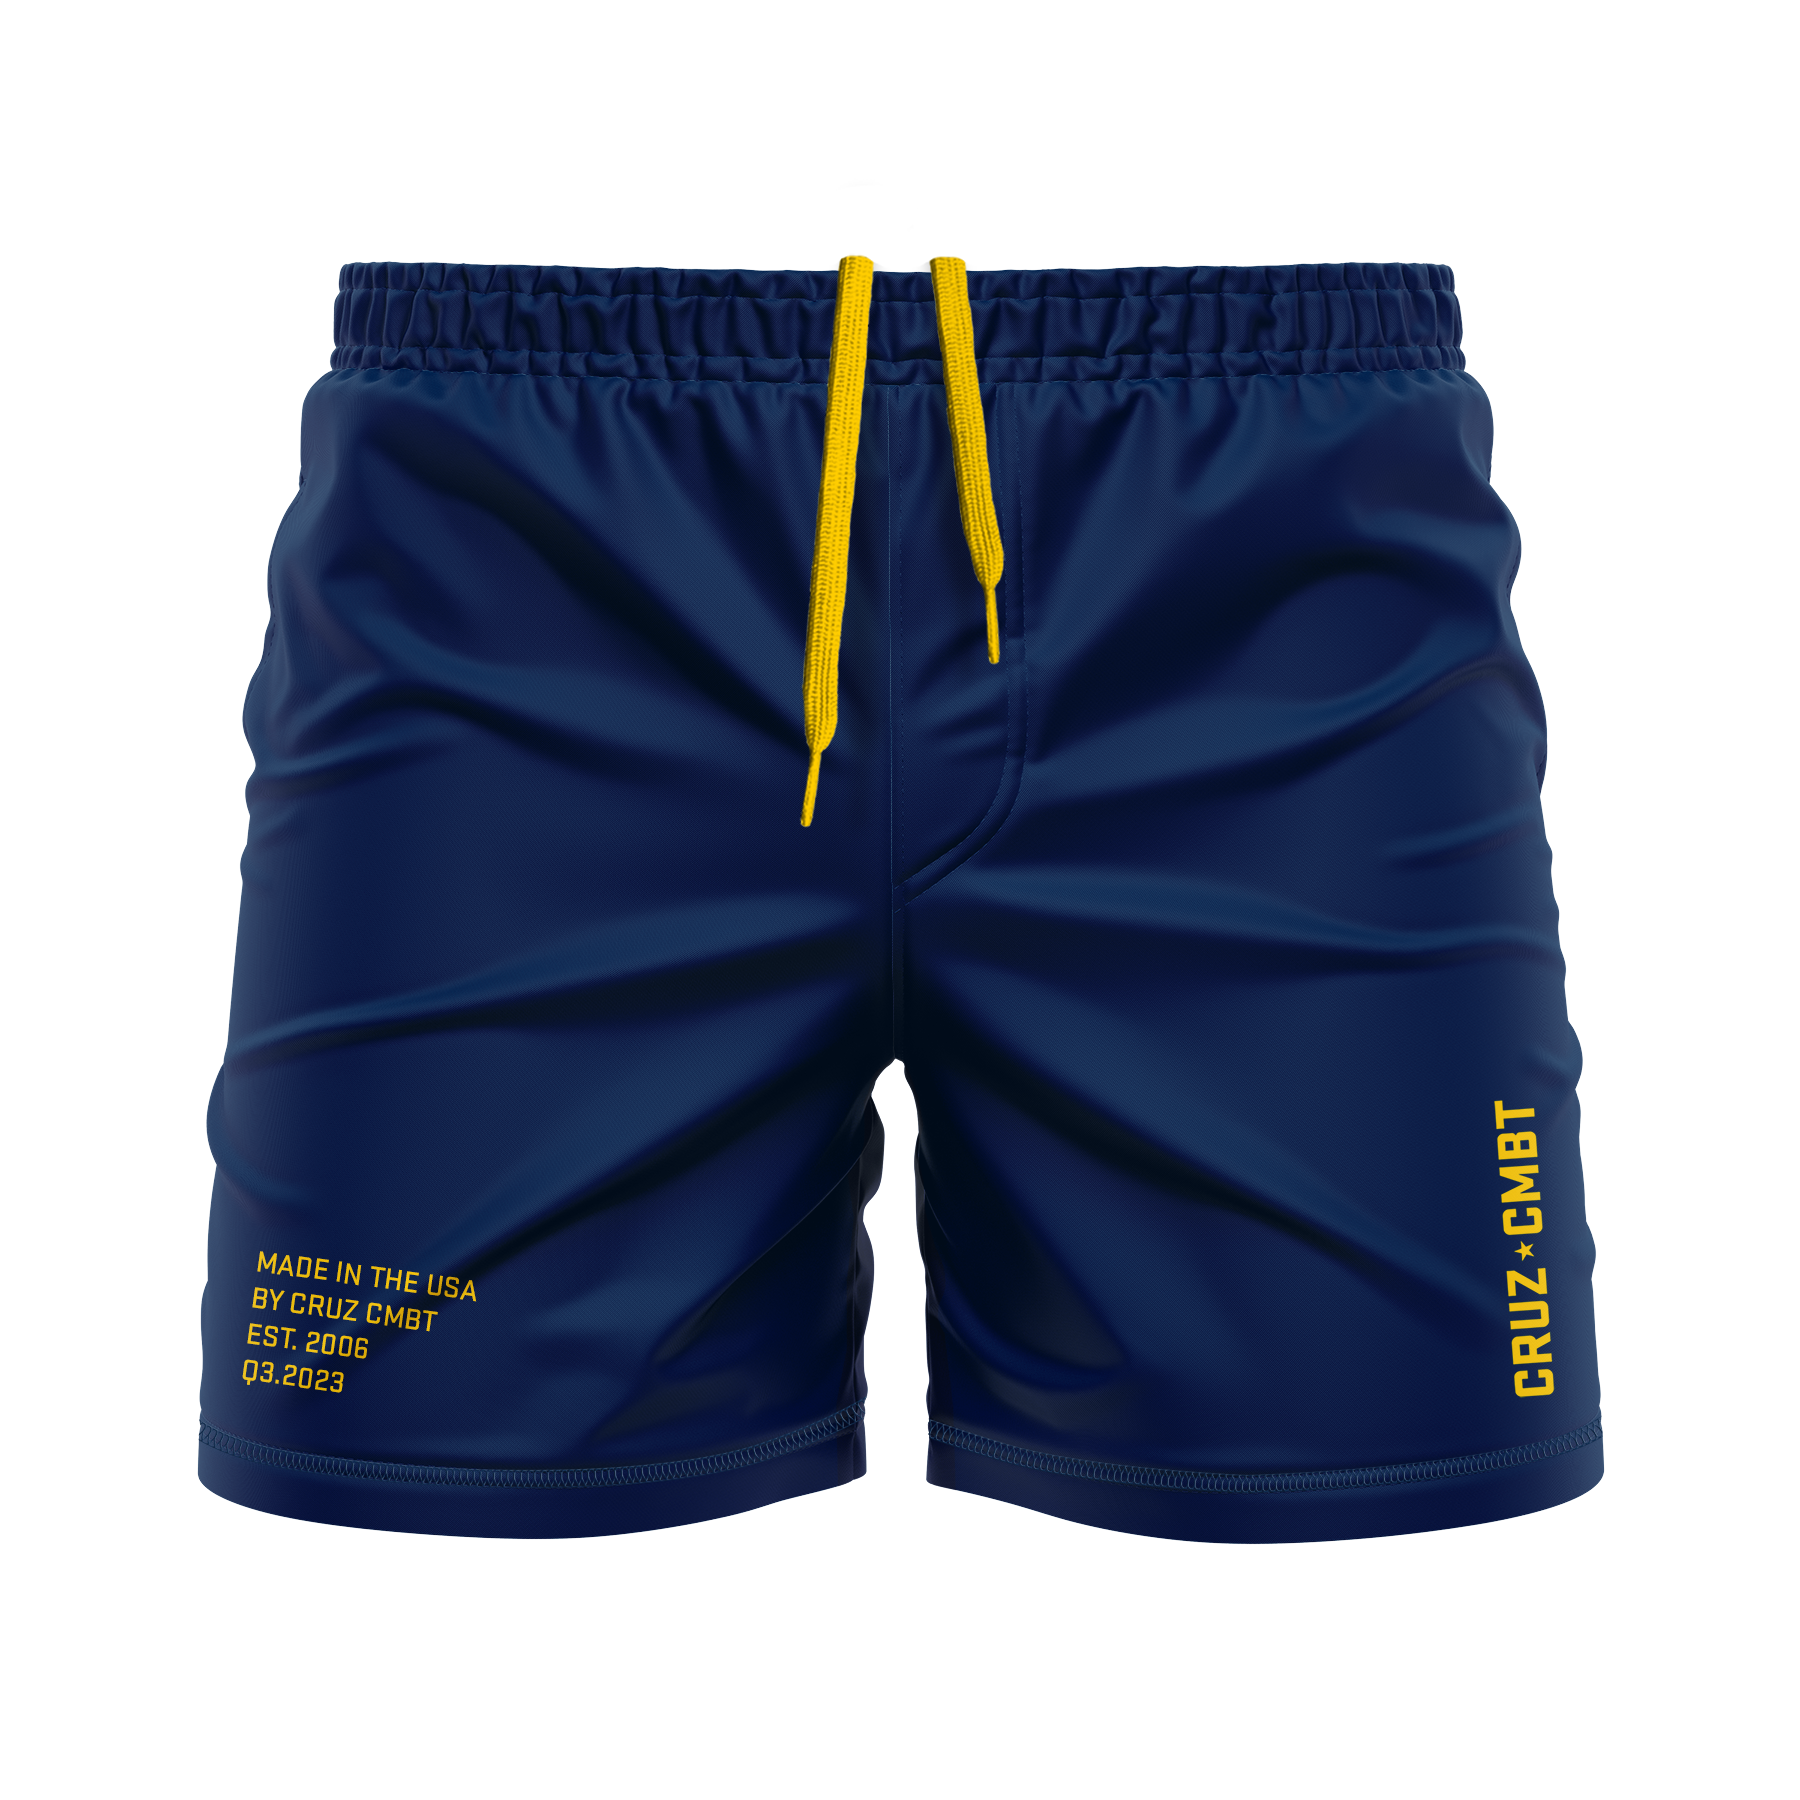 Base Collection men's FC shorts